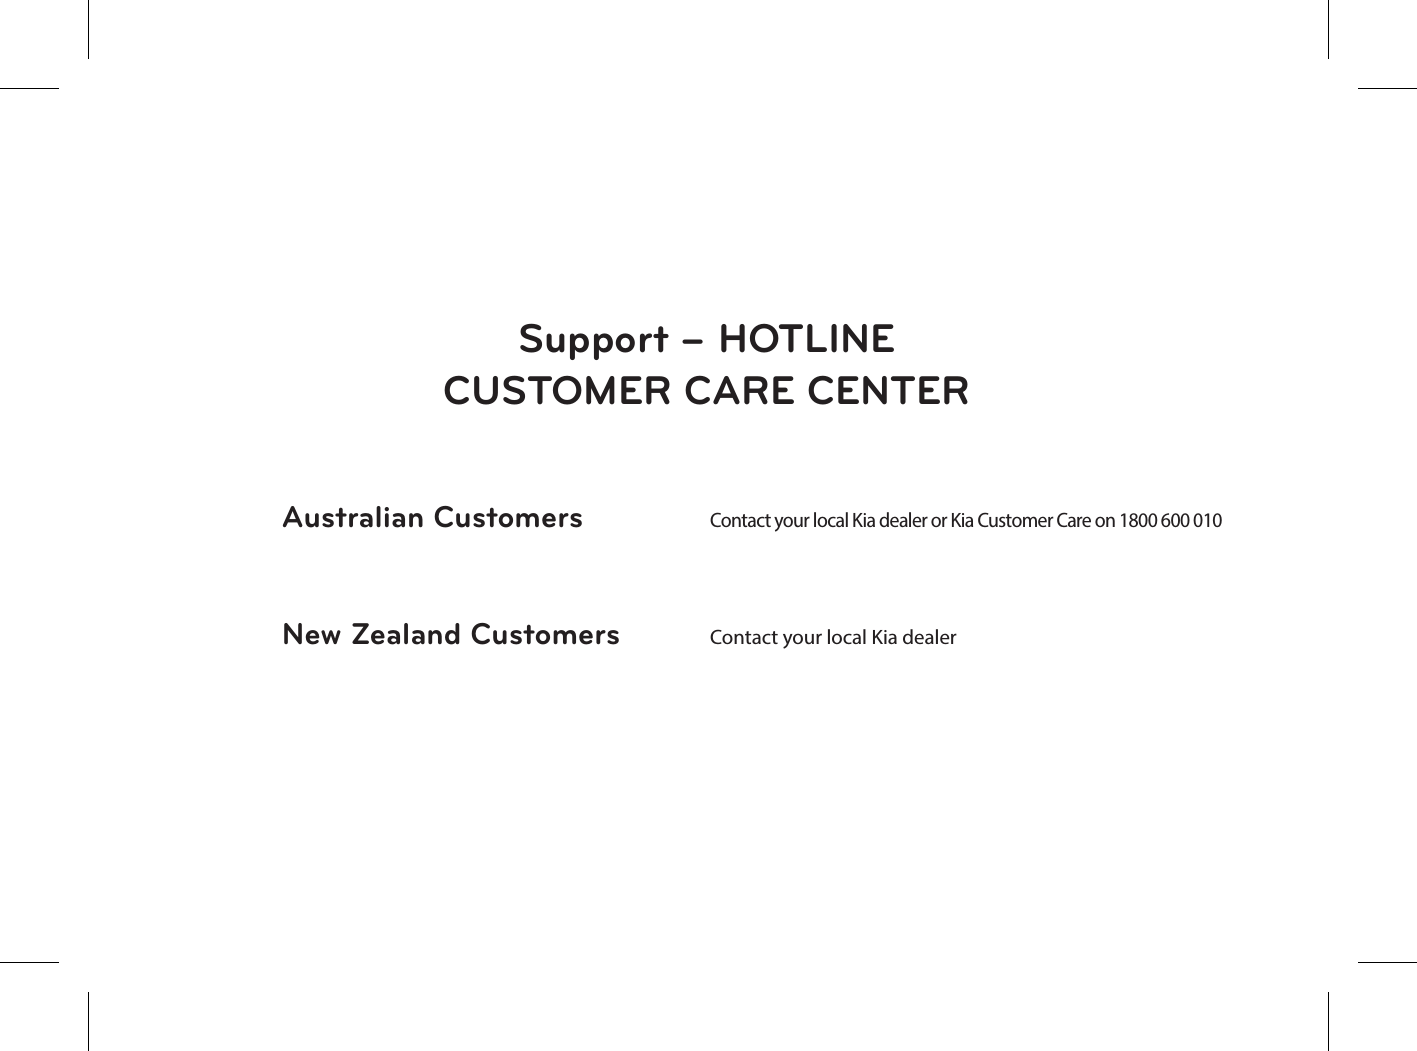 Support – HOTLINECUSTOMER CARE CENTERAustralian CustomersNew Zealand CustomersContact your local Kia dealer or Kia Customer Care on 1800 600 010Contact your local Kia dealer